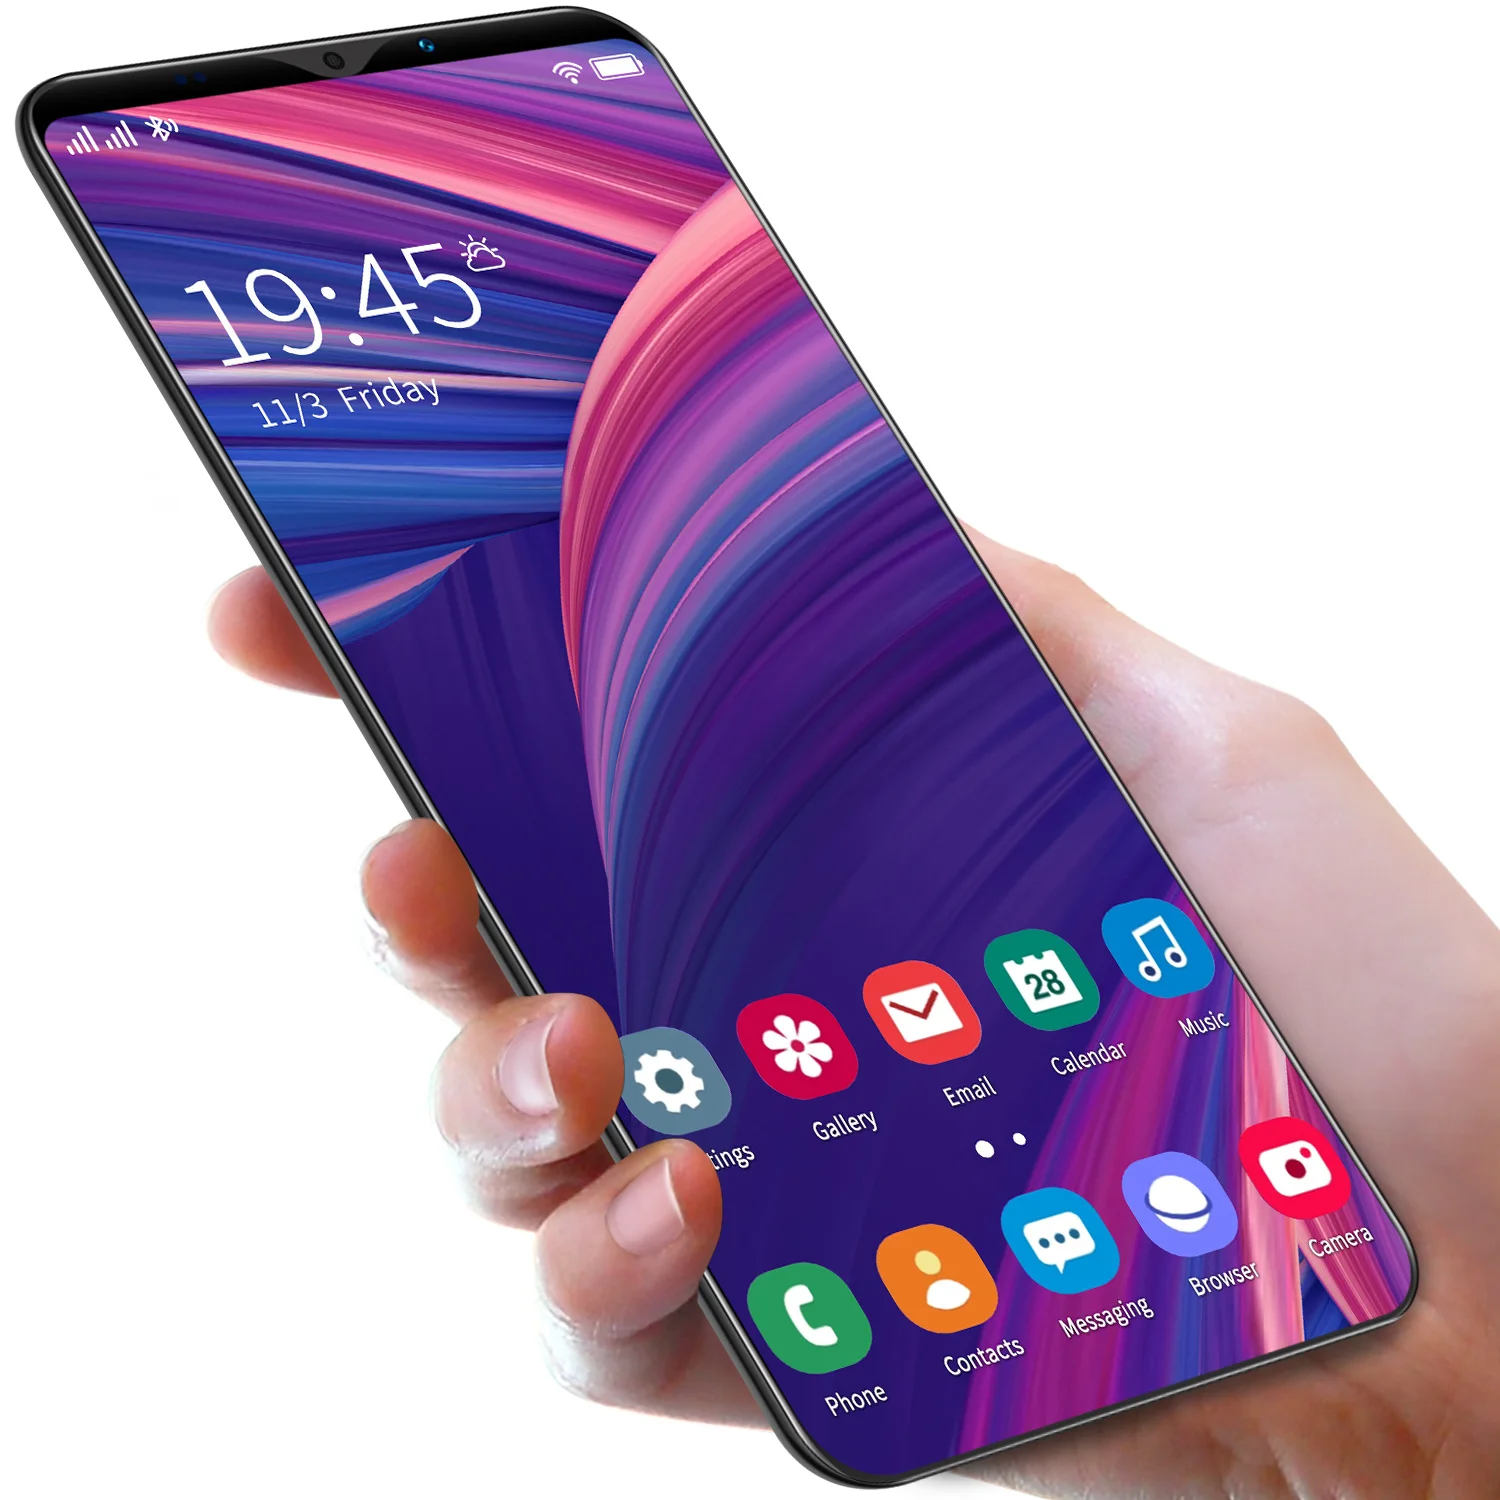 

Good Selling X50 Plus Dual Sim Fingerprint Unlock Celulares Mobile Phones Big Screen Low Price Smartphone Cellphone, Purple, red, blue